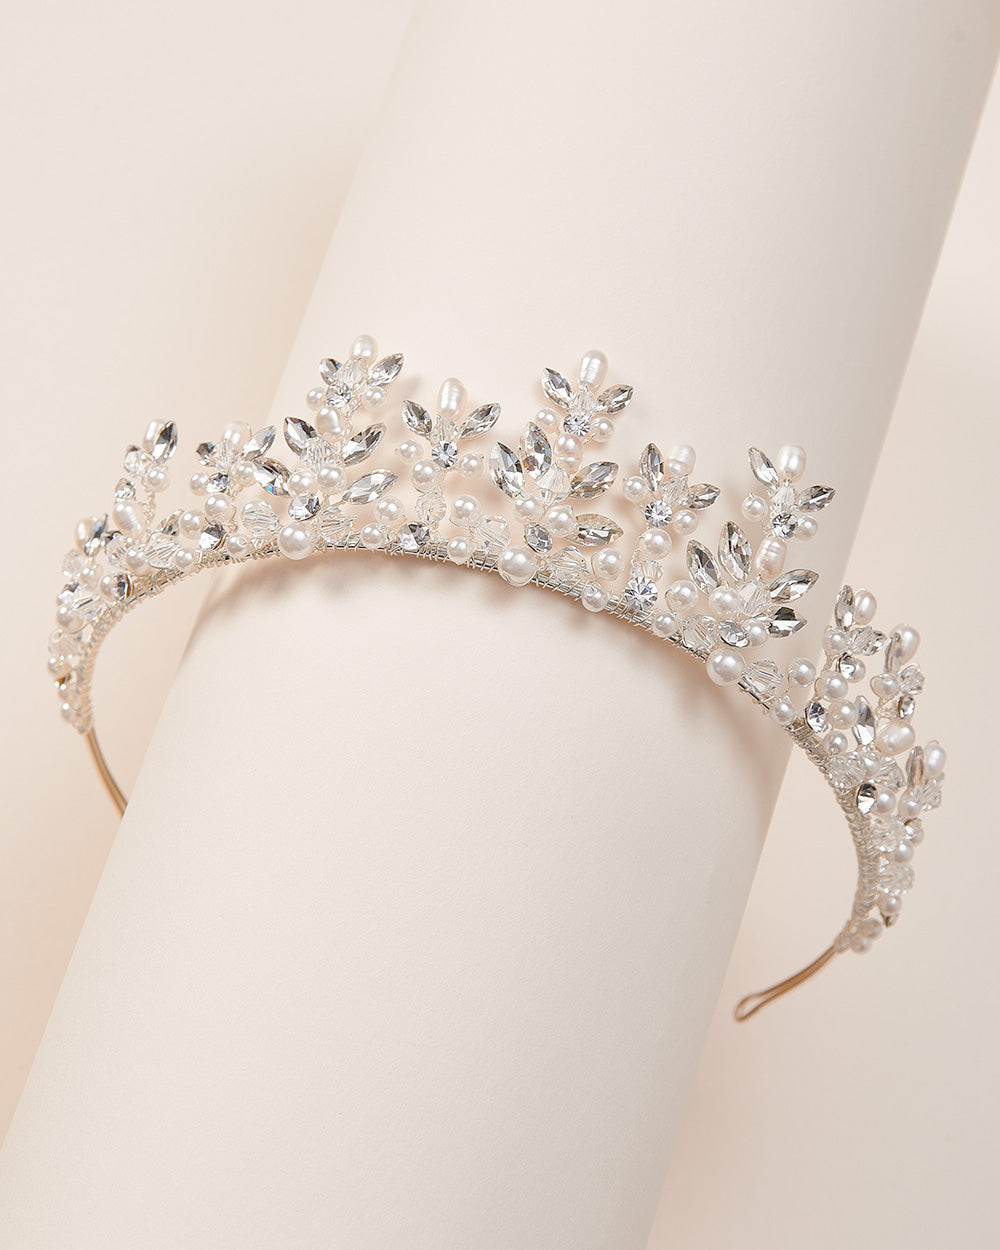 Wedding Tiara with Pearls